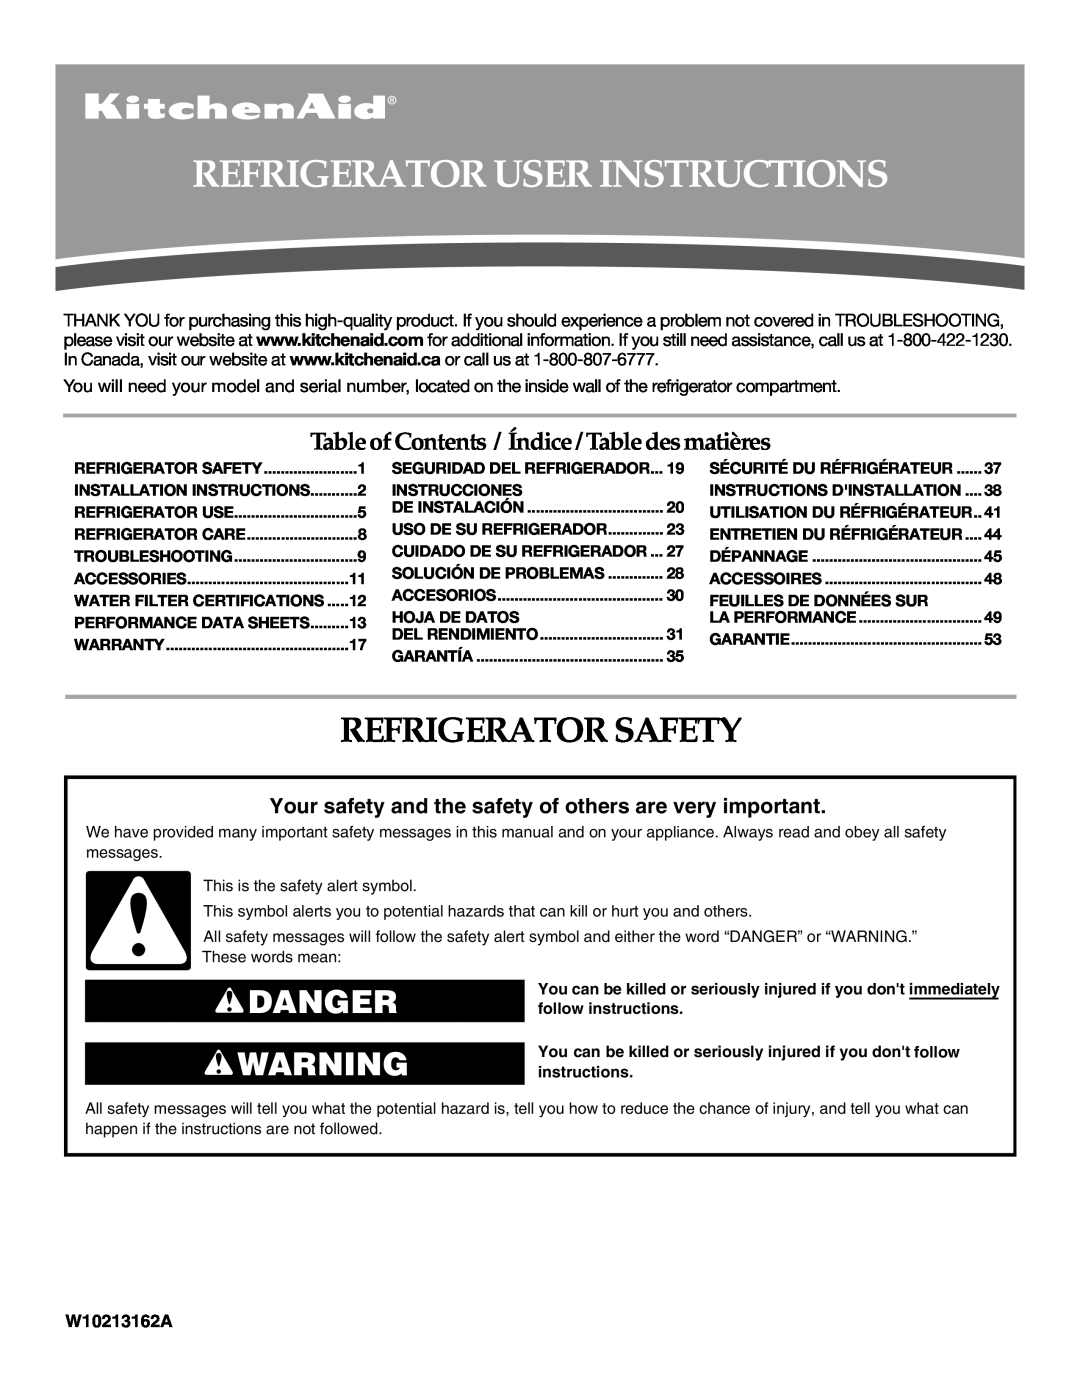 KitchenAid W10213162A installation instructions Refrigerator User Instructions, Refrigerator Safety, Danger 